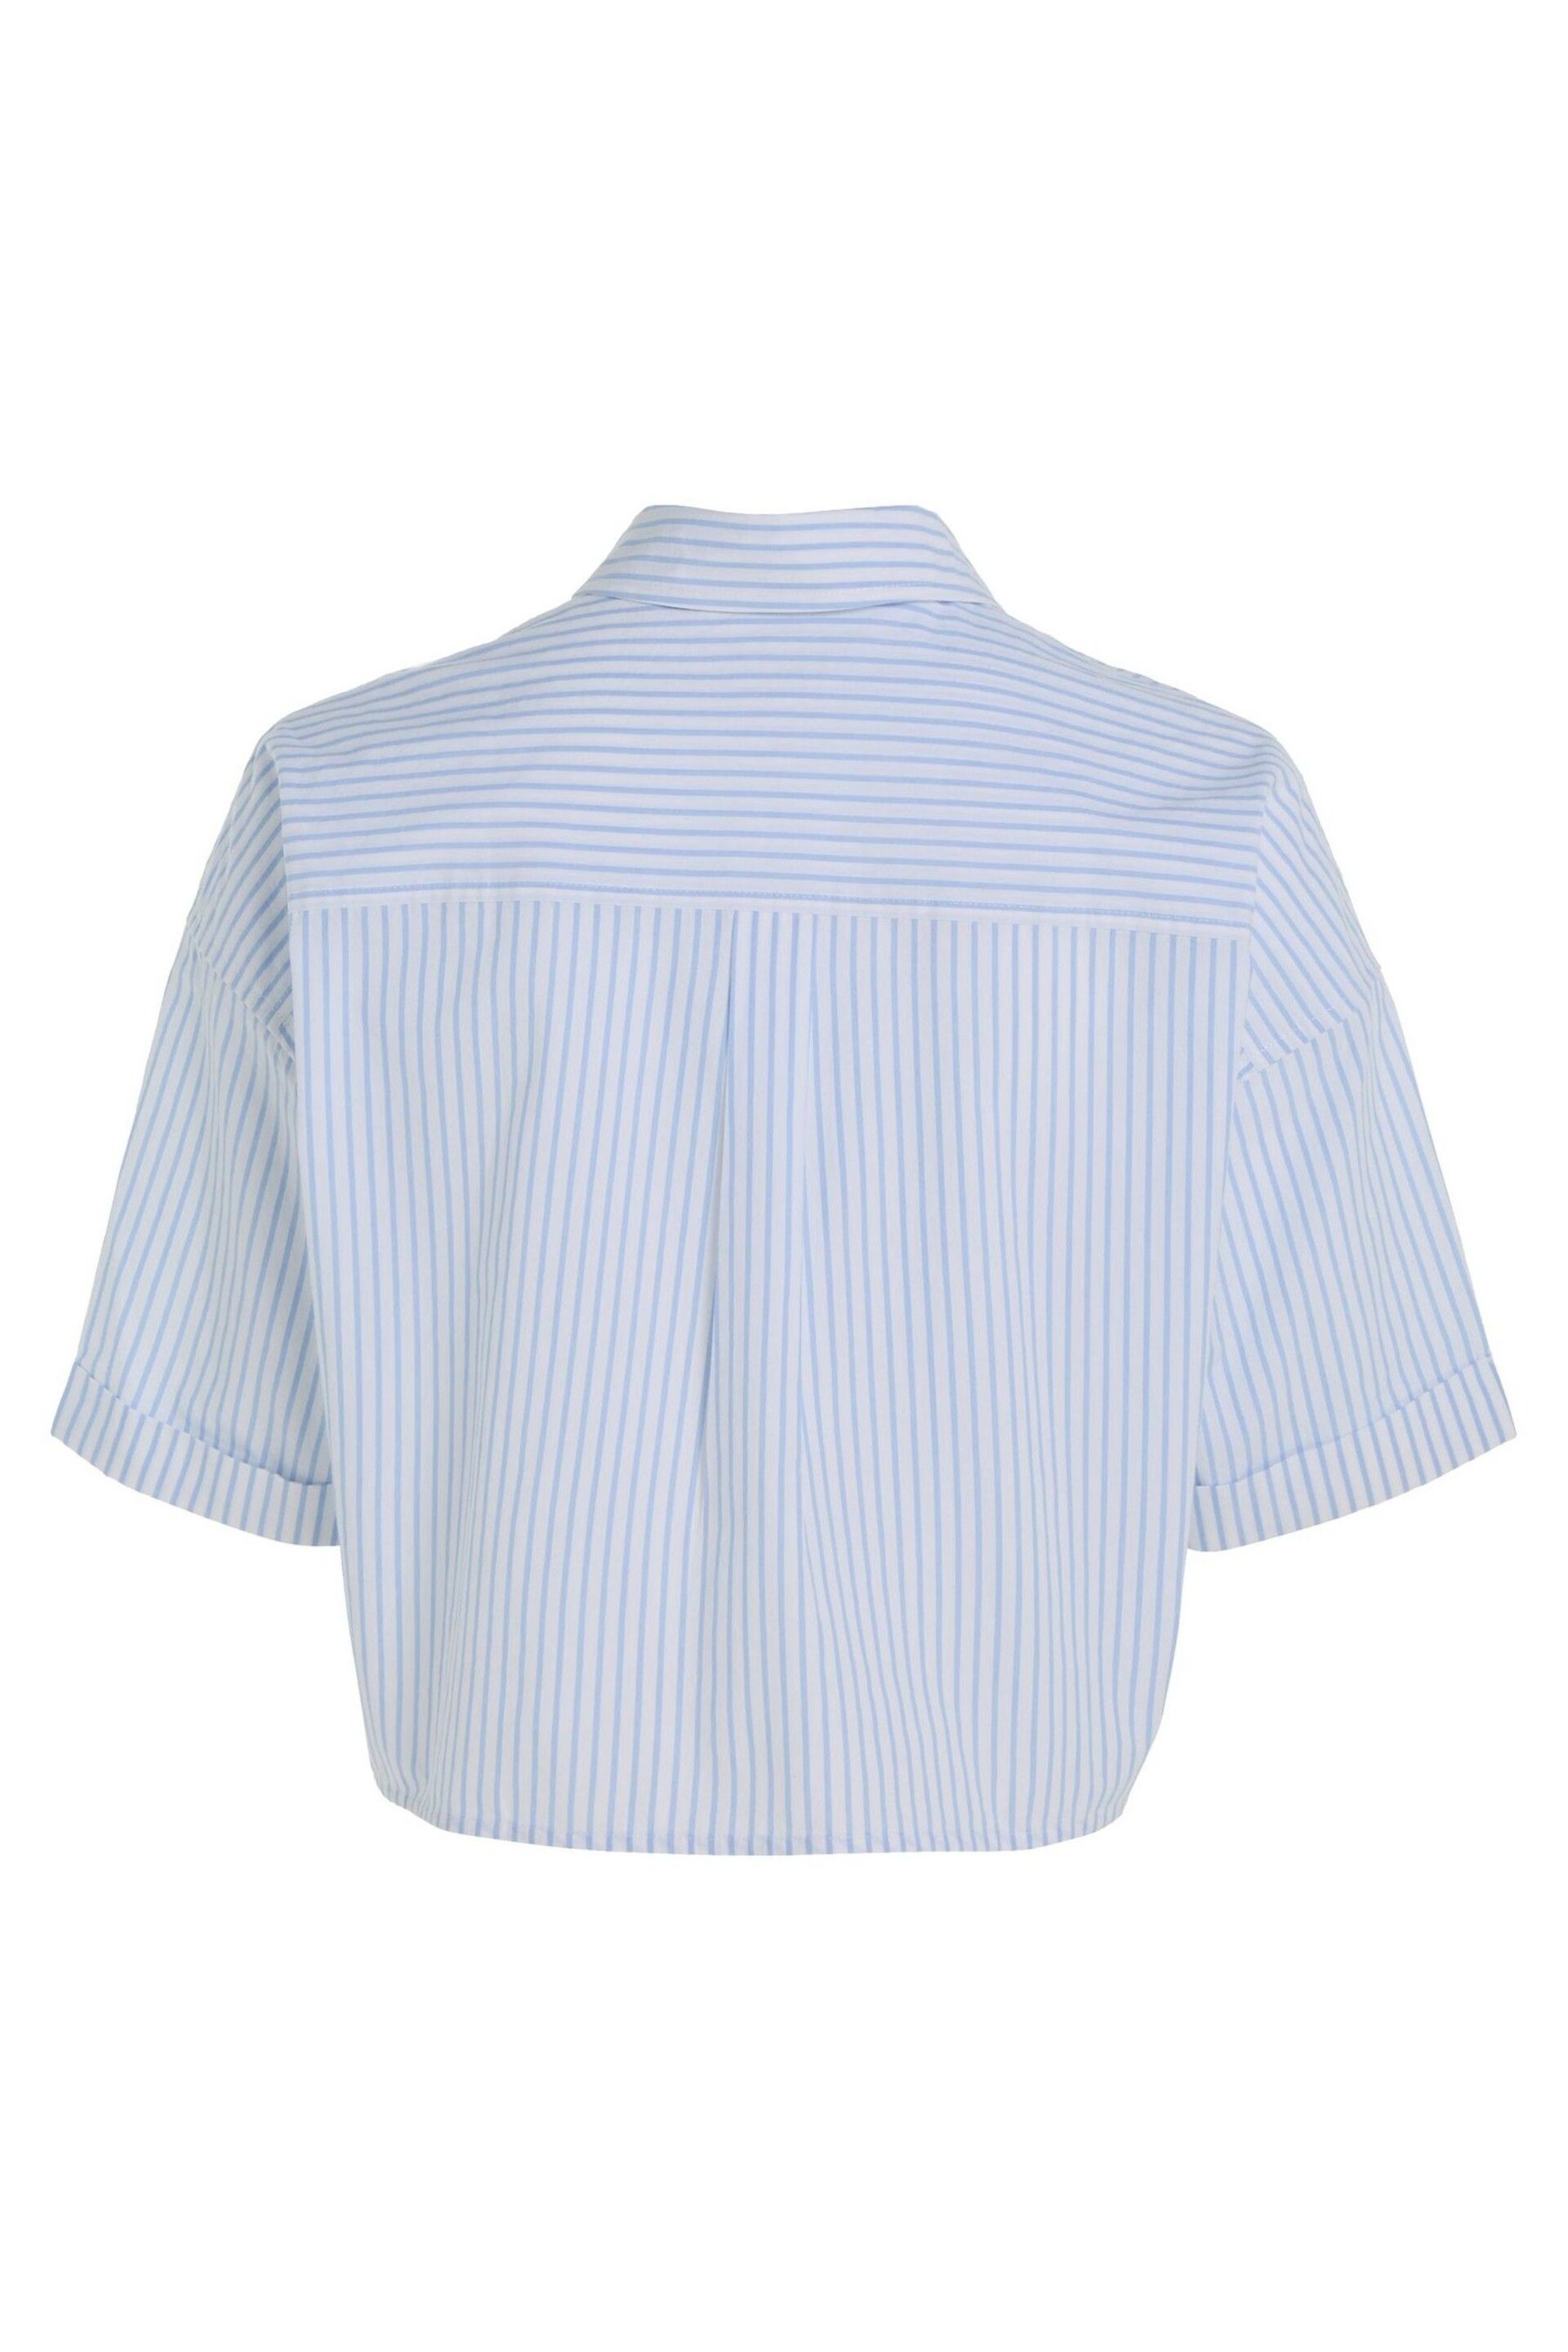 Tommy Jeans Blue Knot Stripe Shirt - Image 5 of 6